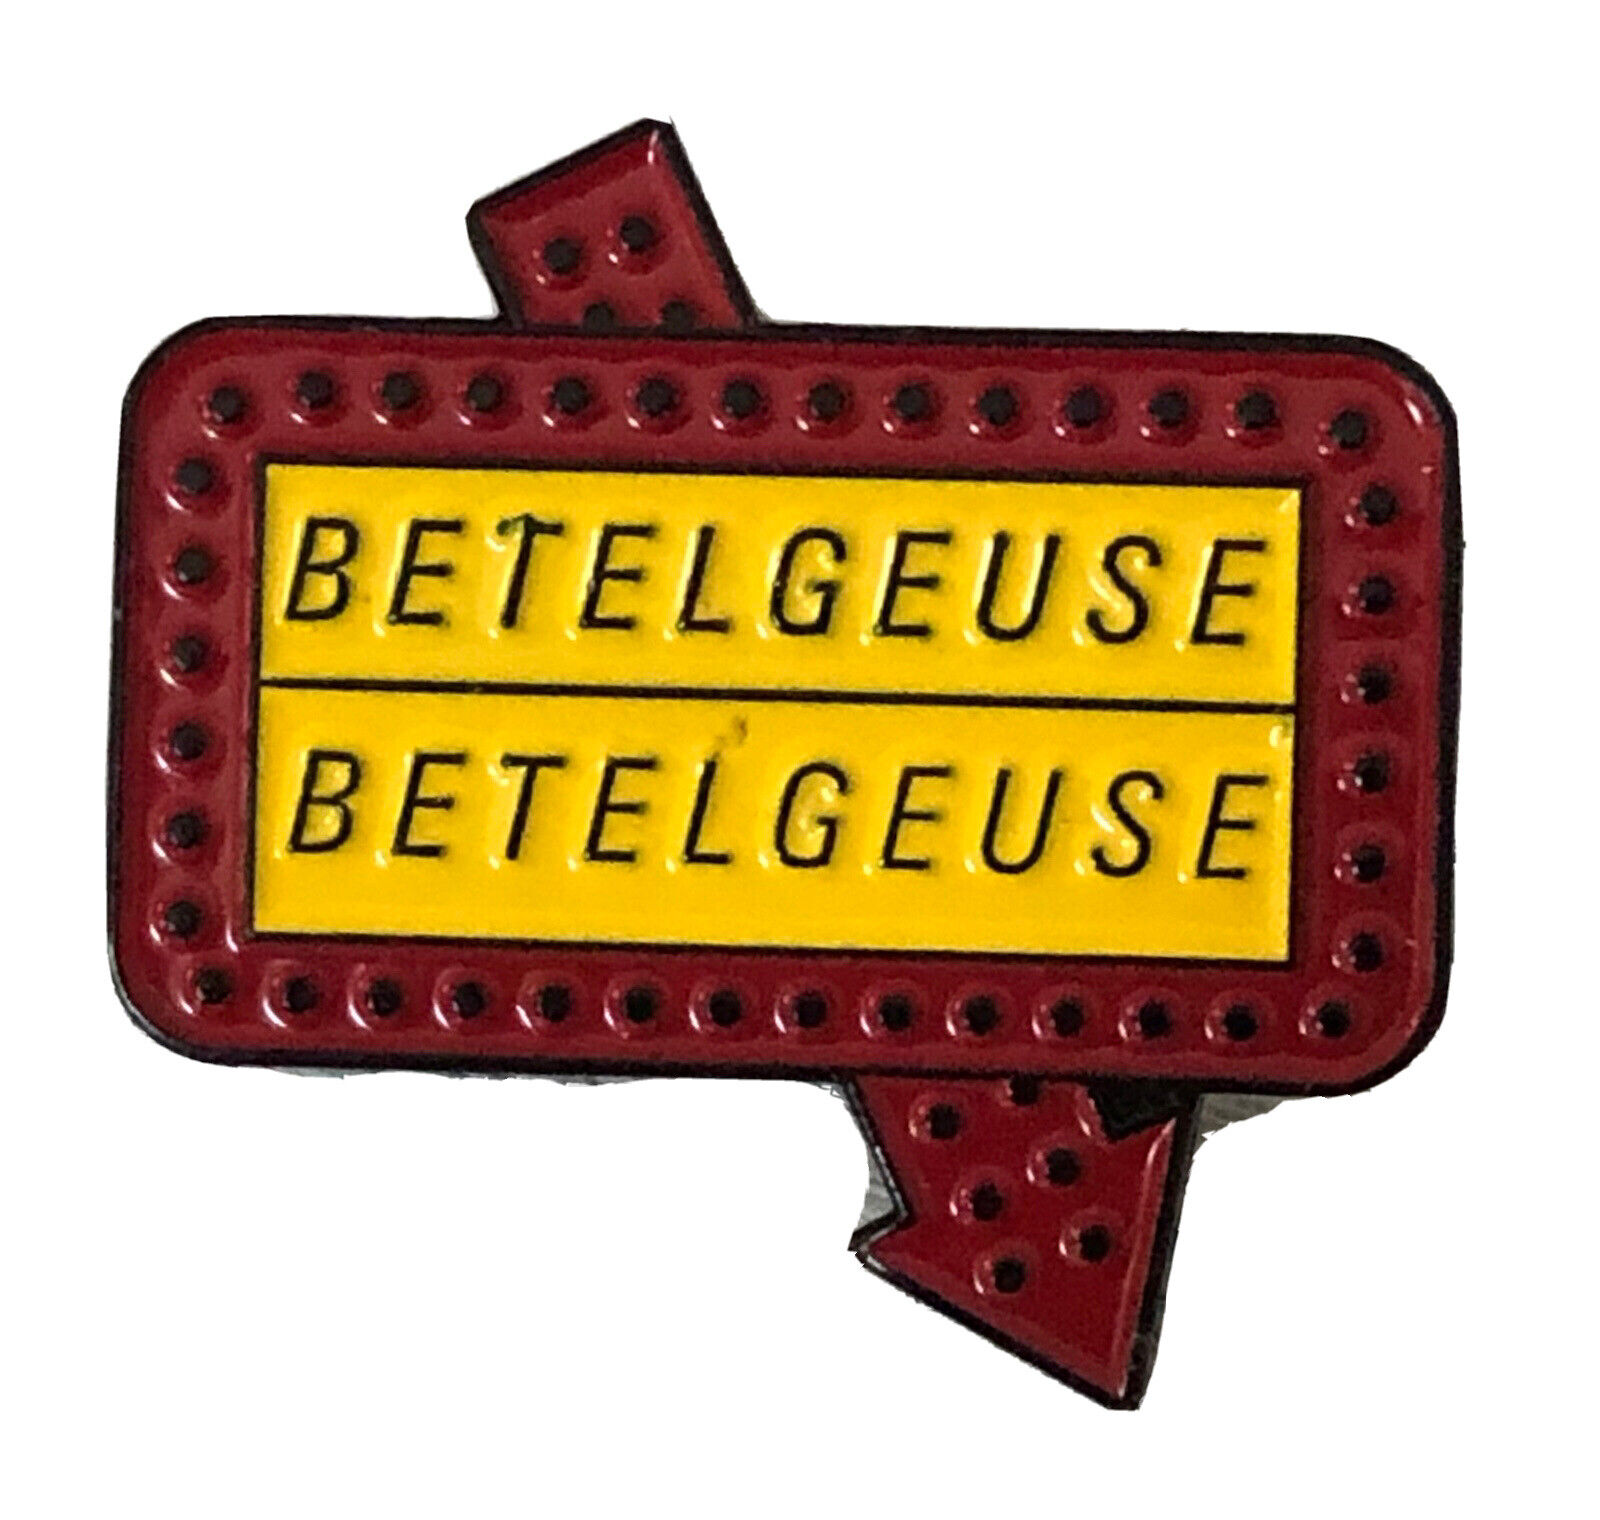 Beetlejuice Pin Betelgeuse Mini Sign Pin Badge Enamel A71